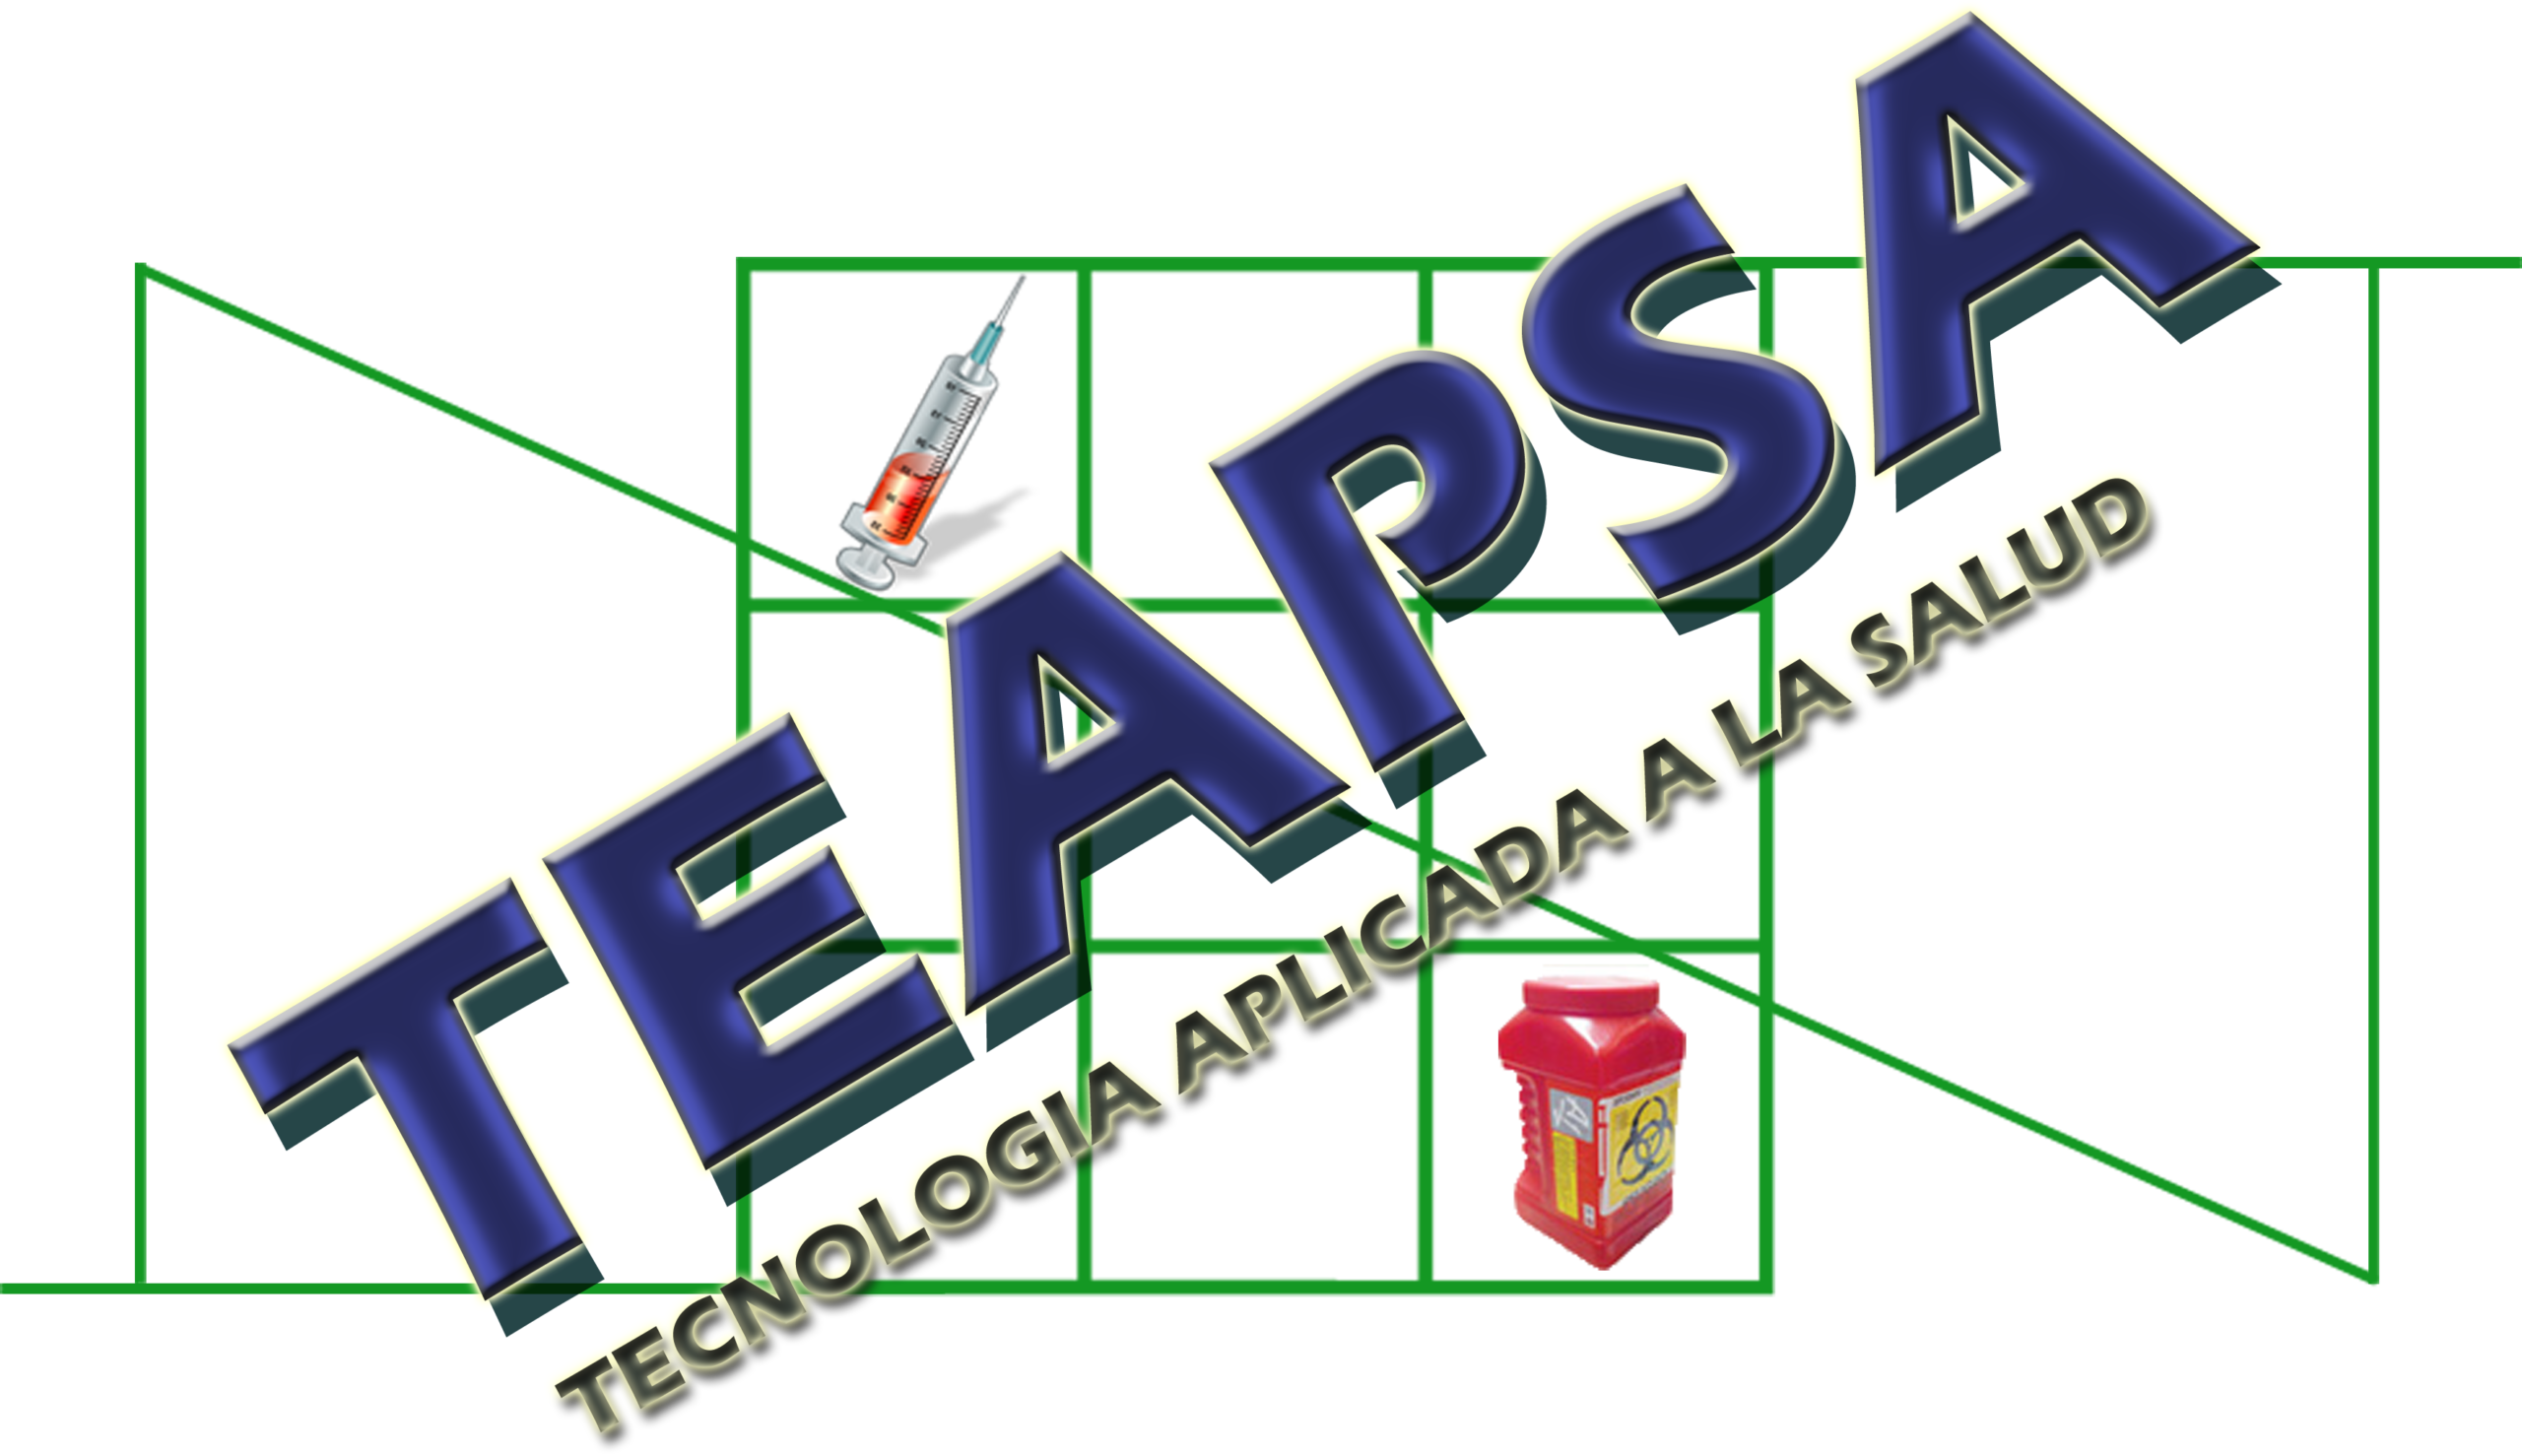 TEAPSA (Tecnología Aplicada a la Salud)